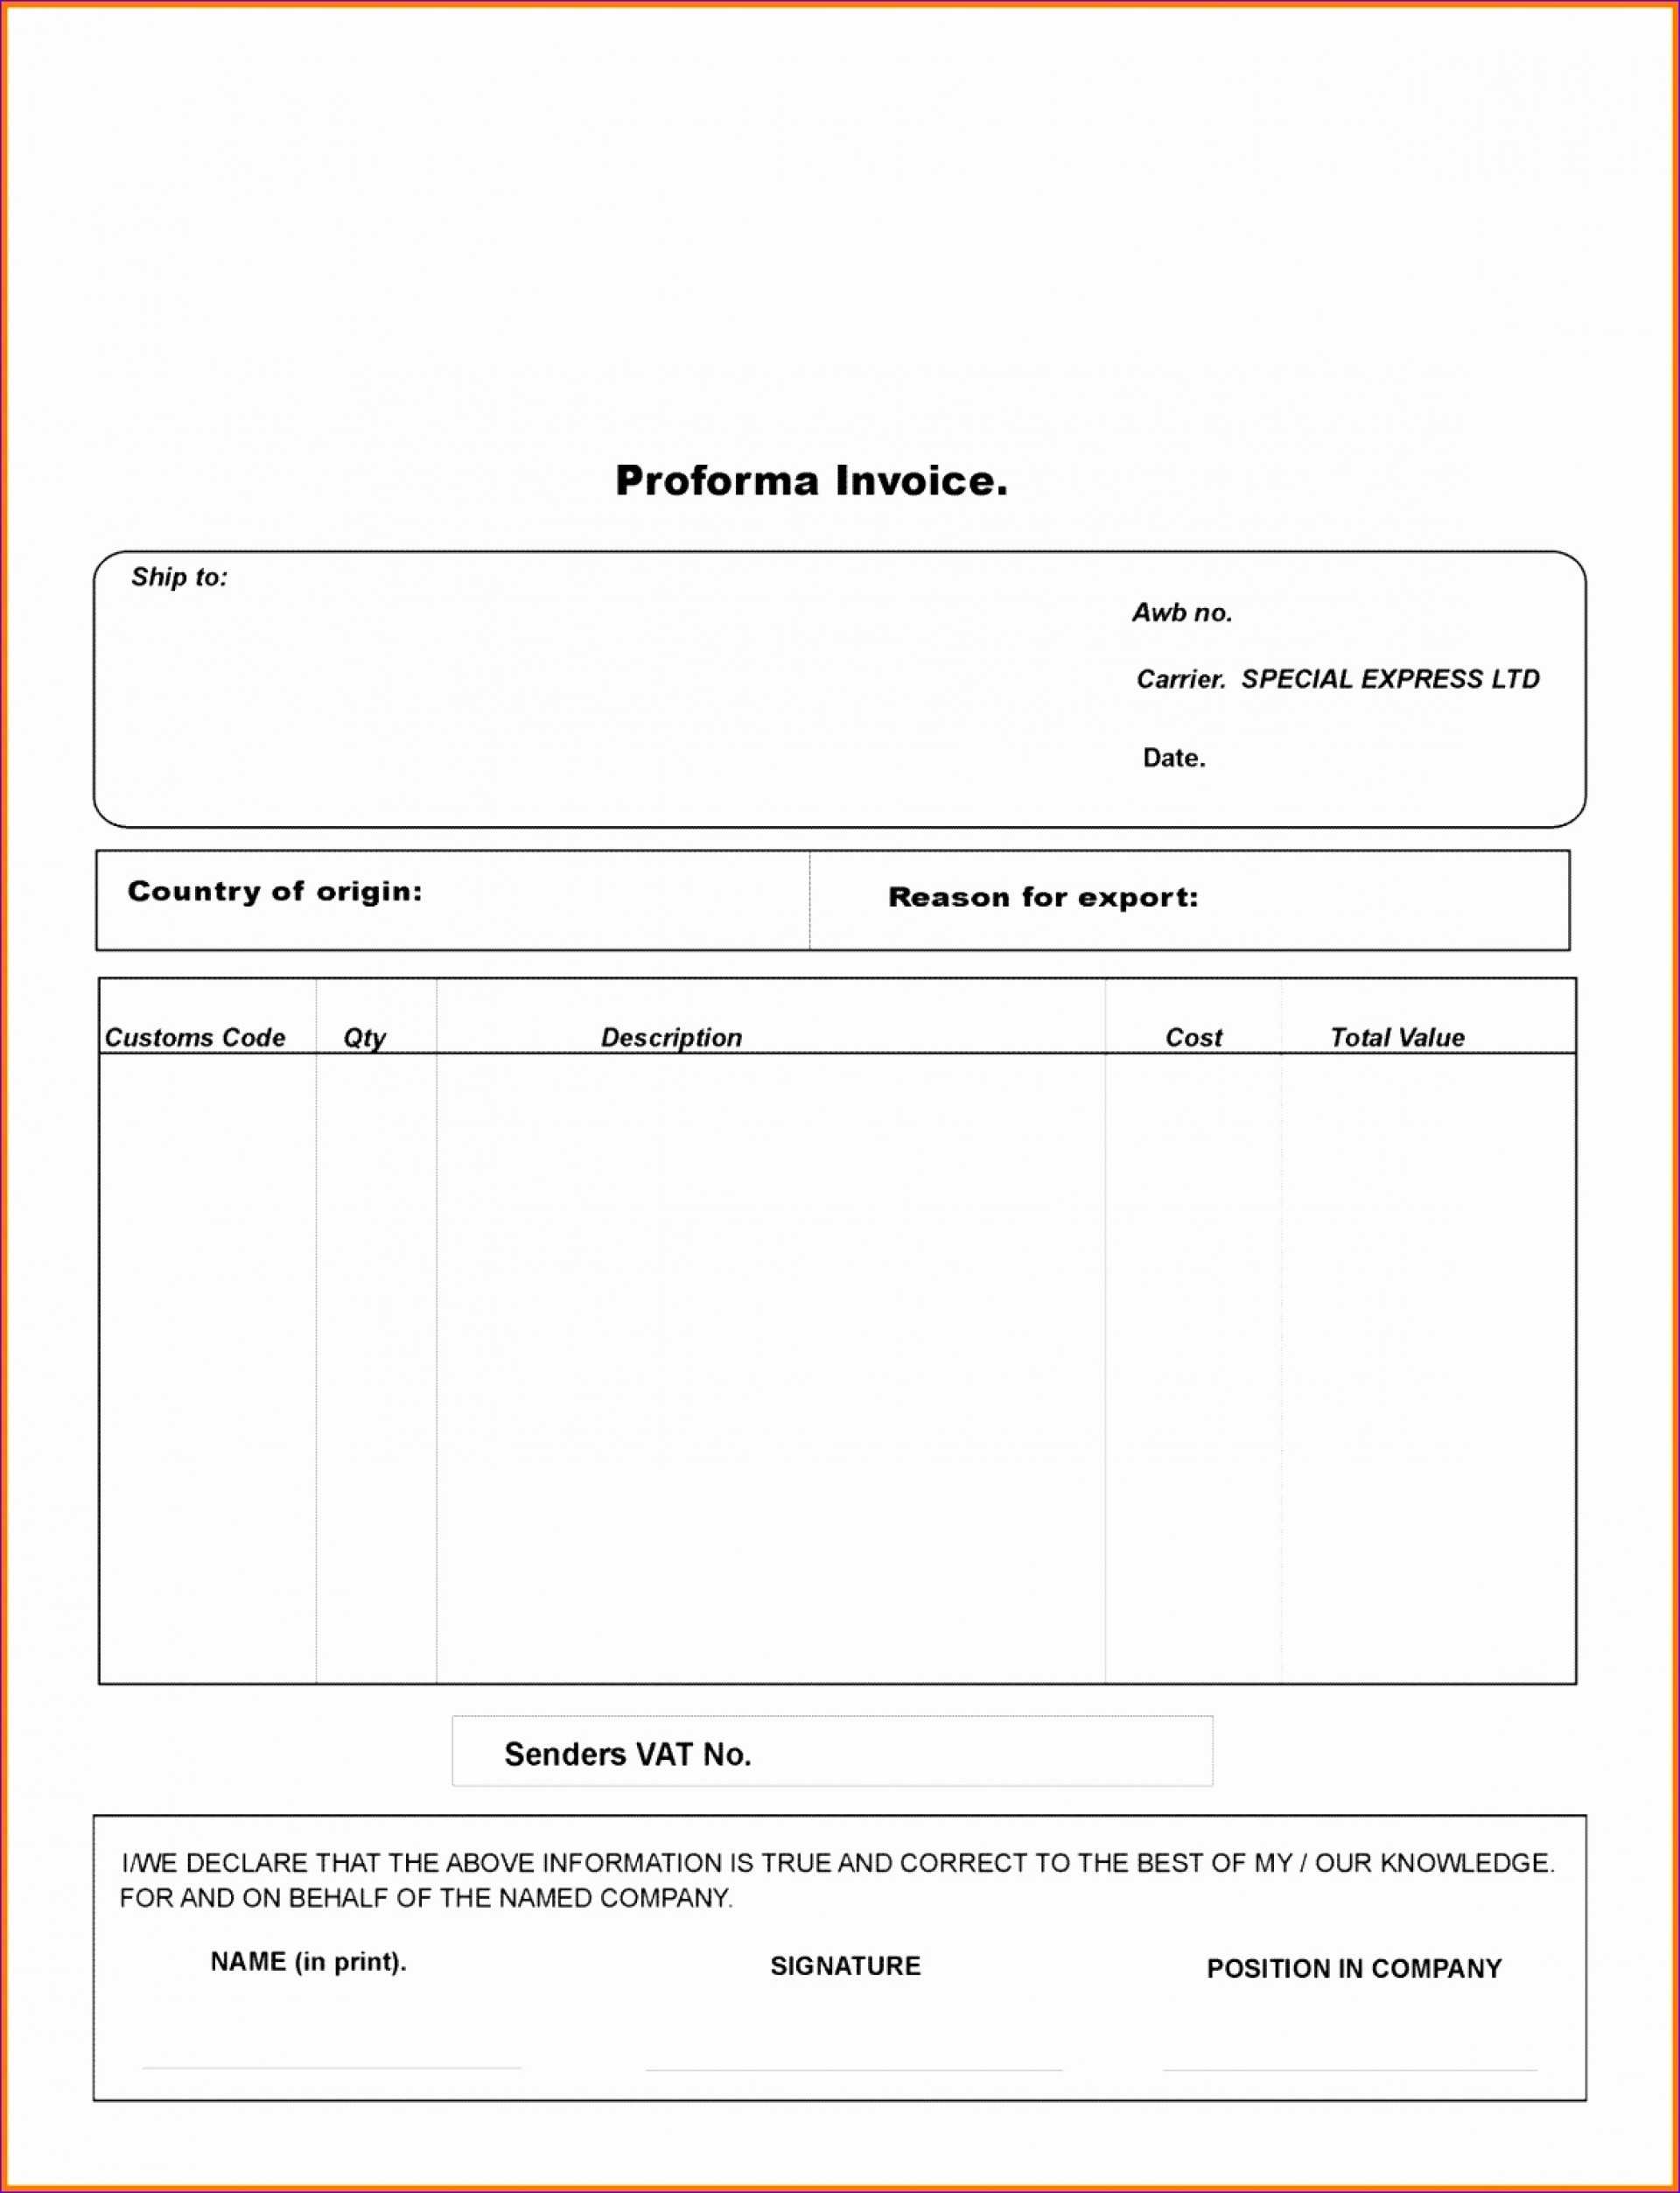 028 Proforma Invoice Template Pdf Free Download Ideas Simple For Free Proforma Invoice Template Word